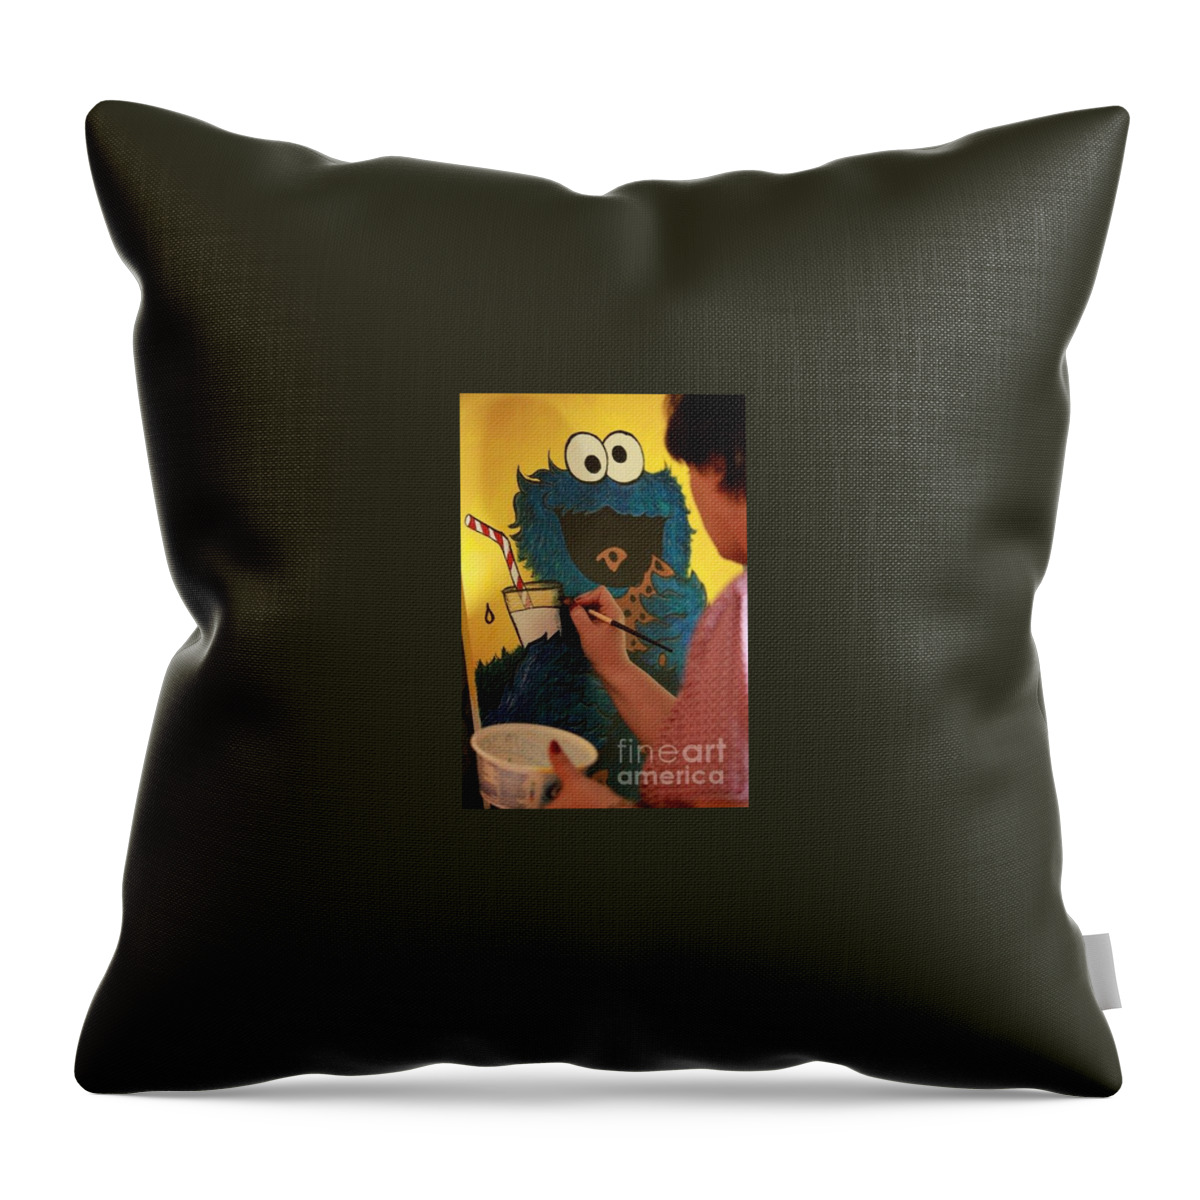 Jacqueline Athmann Throw Pillow featuring the photograph Jacqueline Athmann Painting by Jacqueline Athmann